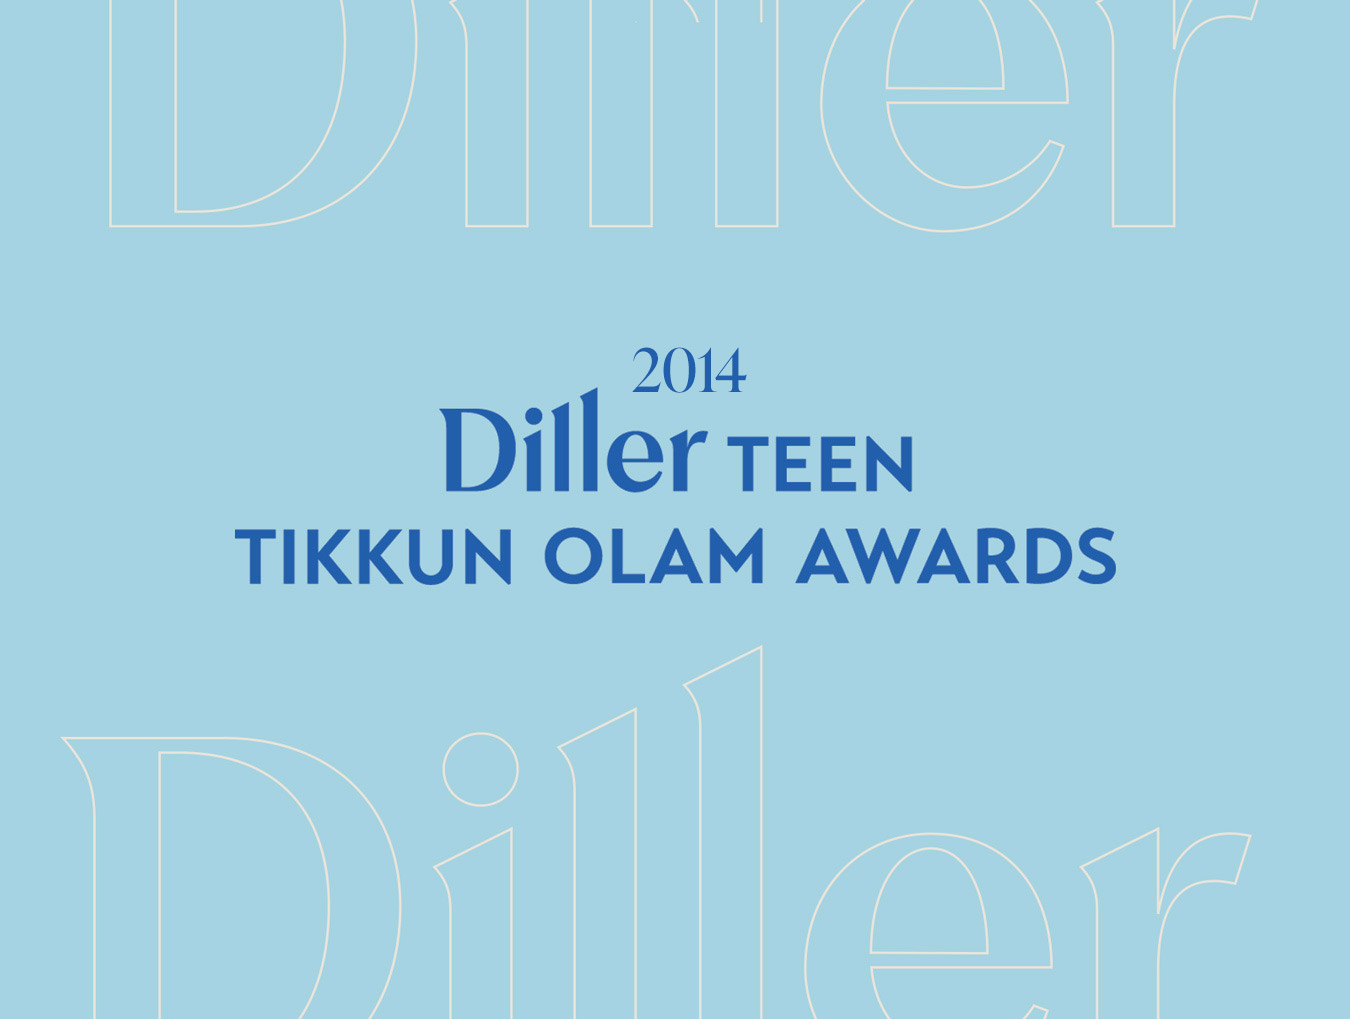 2014 Diller Teen Tikkun Olam Awards video